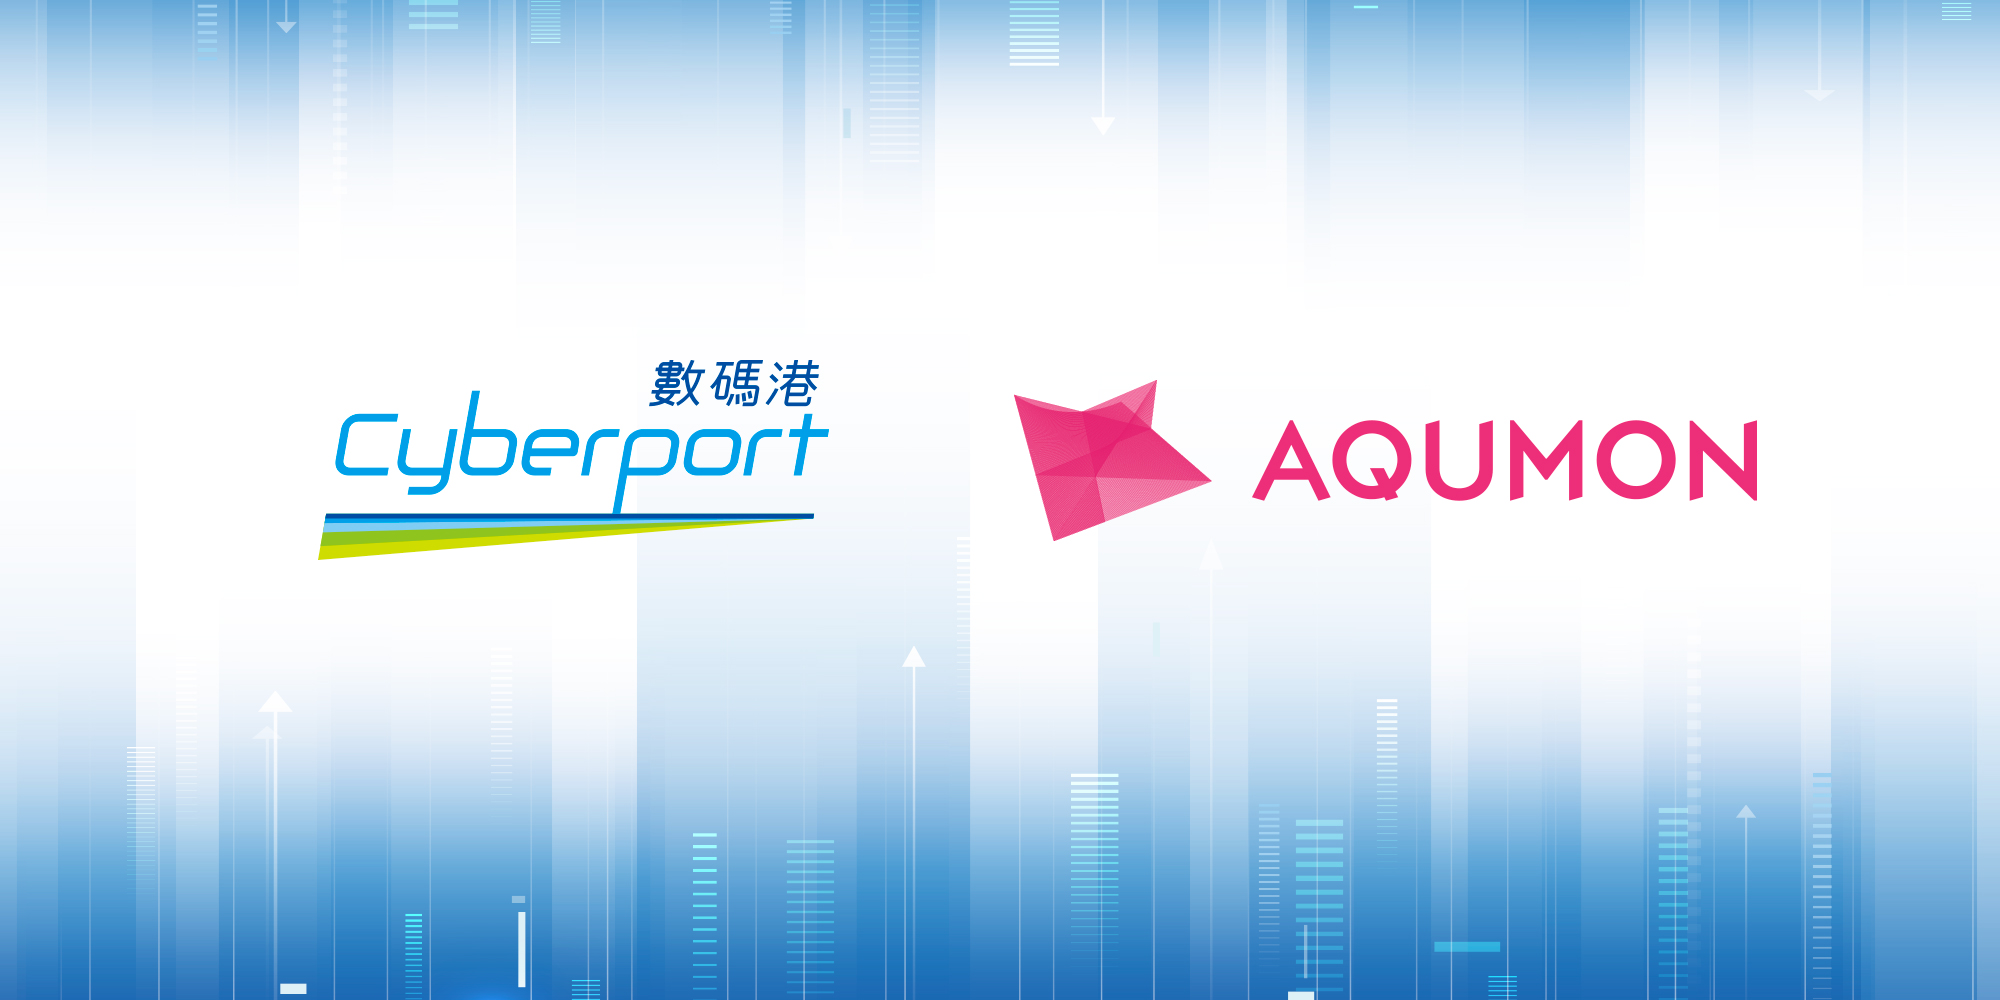 AQUMON as Part of Cyberport's Incubation Program